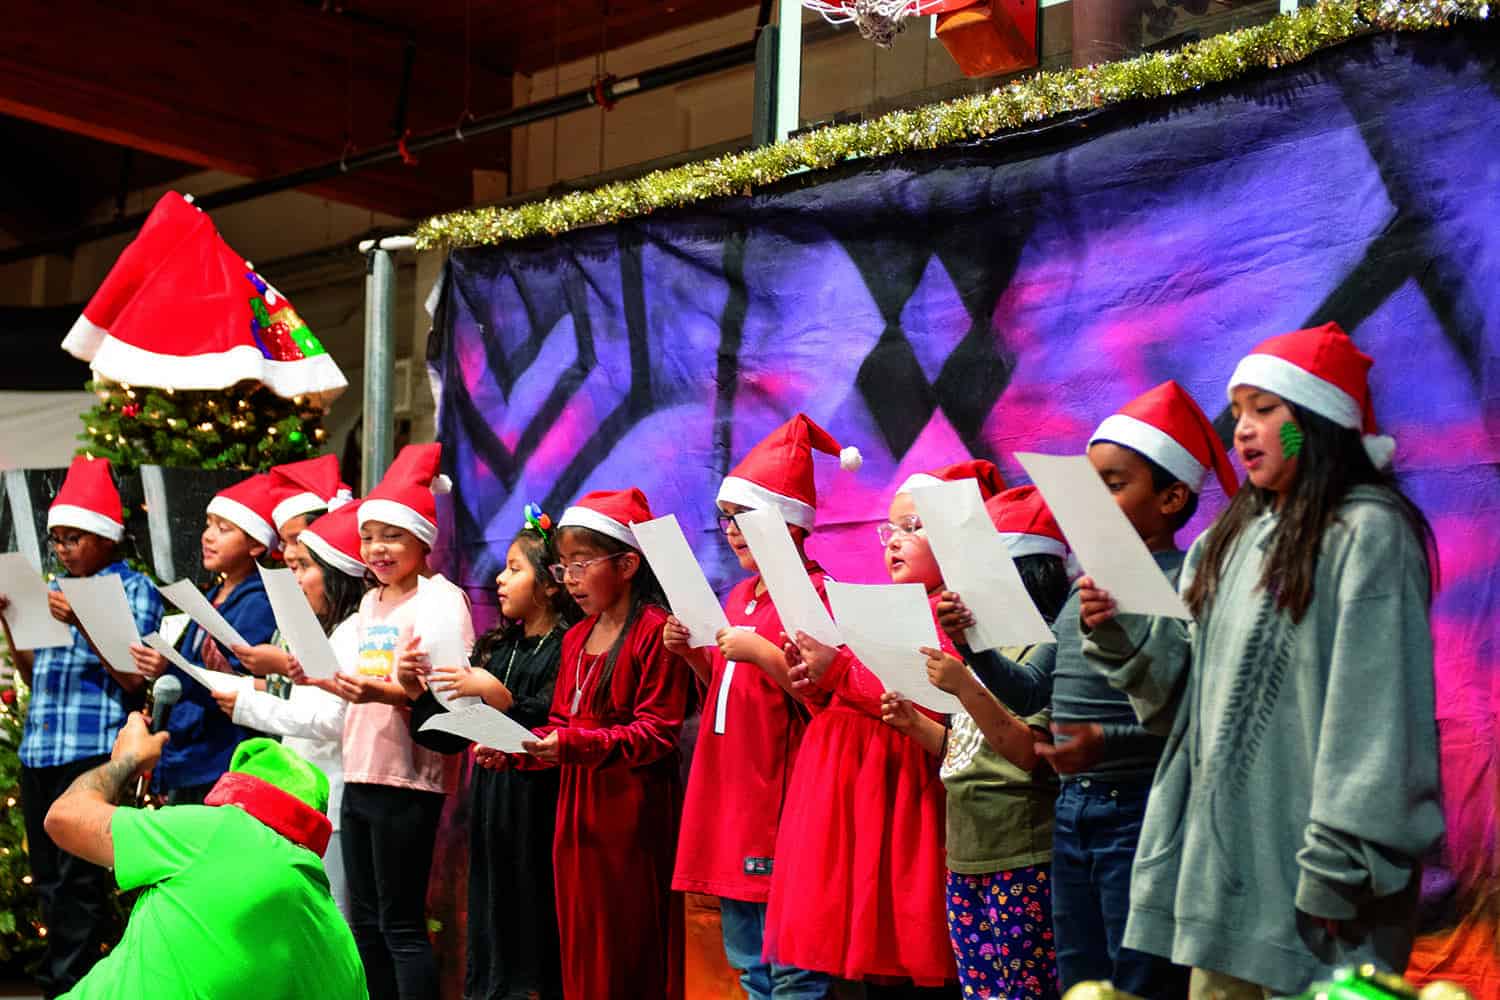 Christmas Raps and Carols Fill ‘A Rapper’s Christmas’ Program